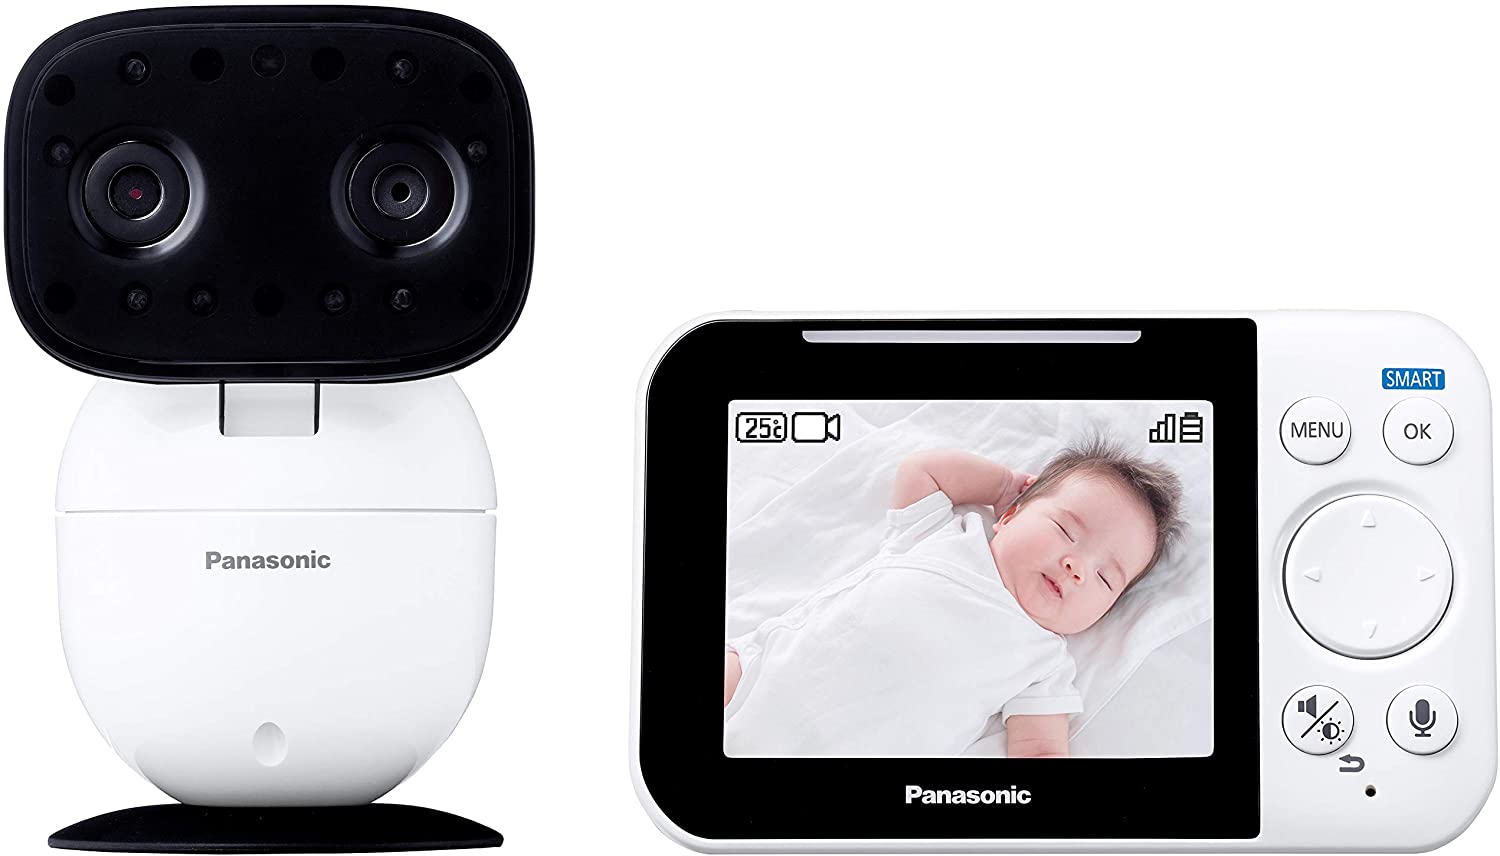 【Panasonic】モニター付き屋内カメラ  ベビーモニター